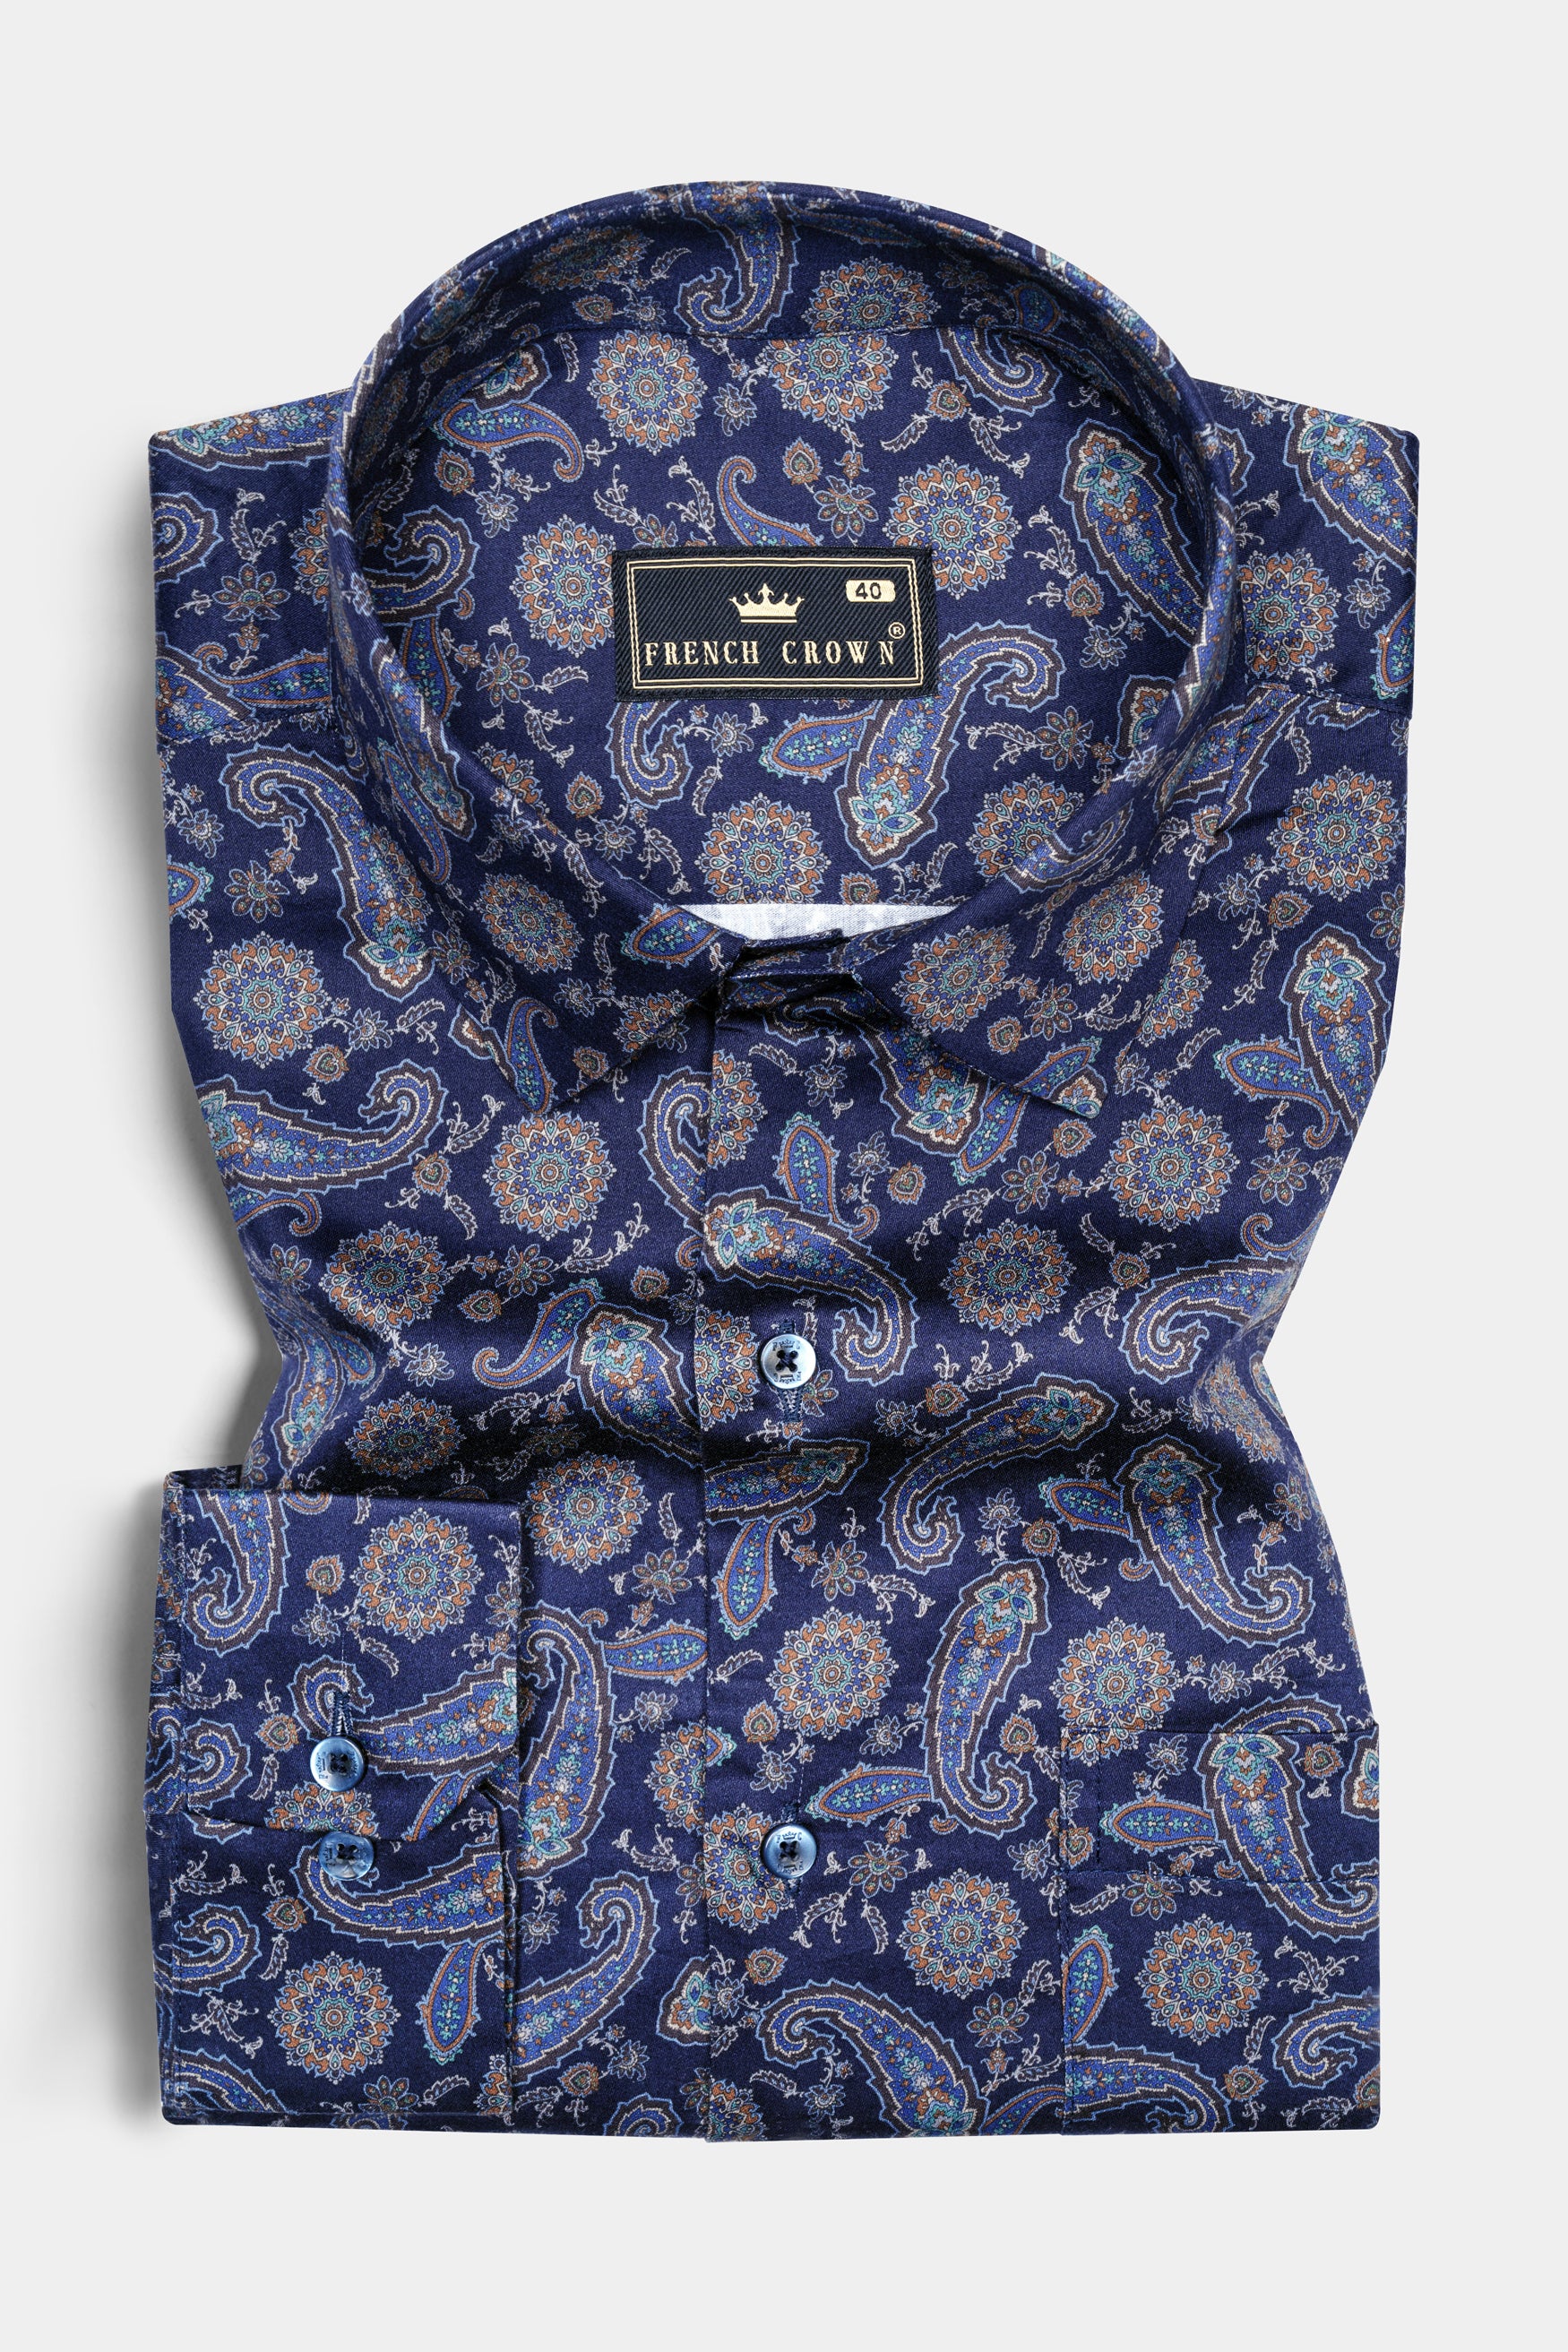 Ebony Blue Paisley Printed Super Soft Premium Cotton Shirt